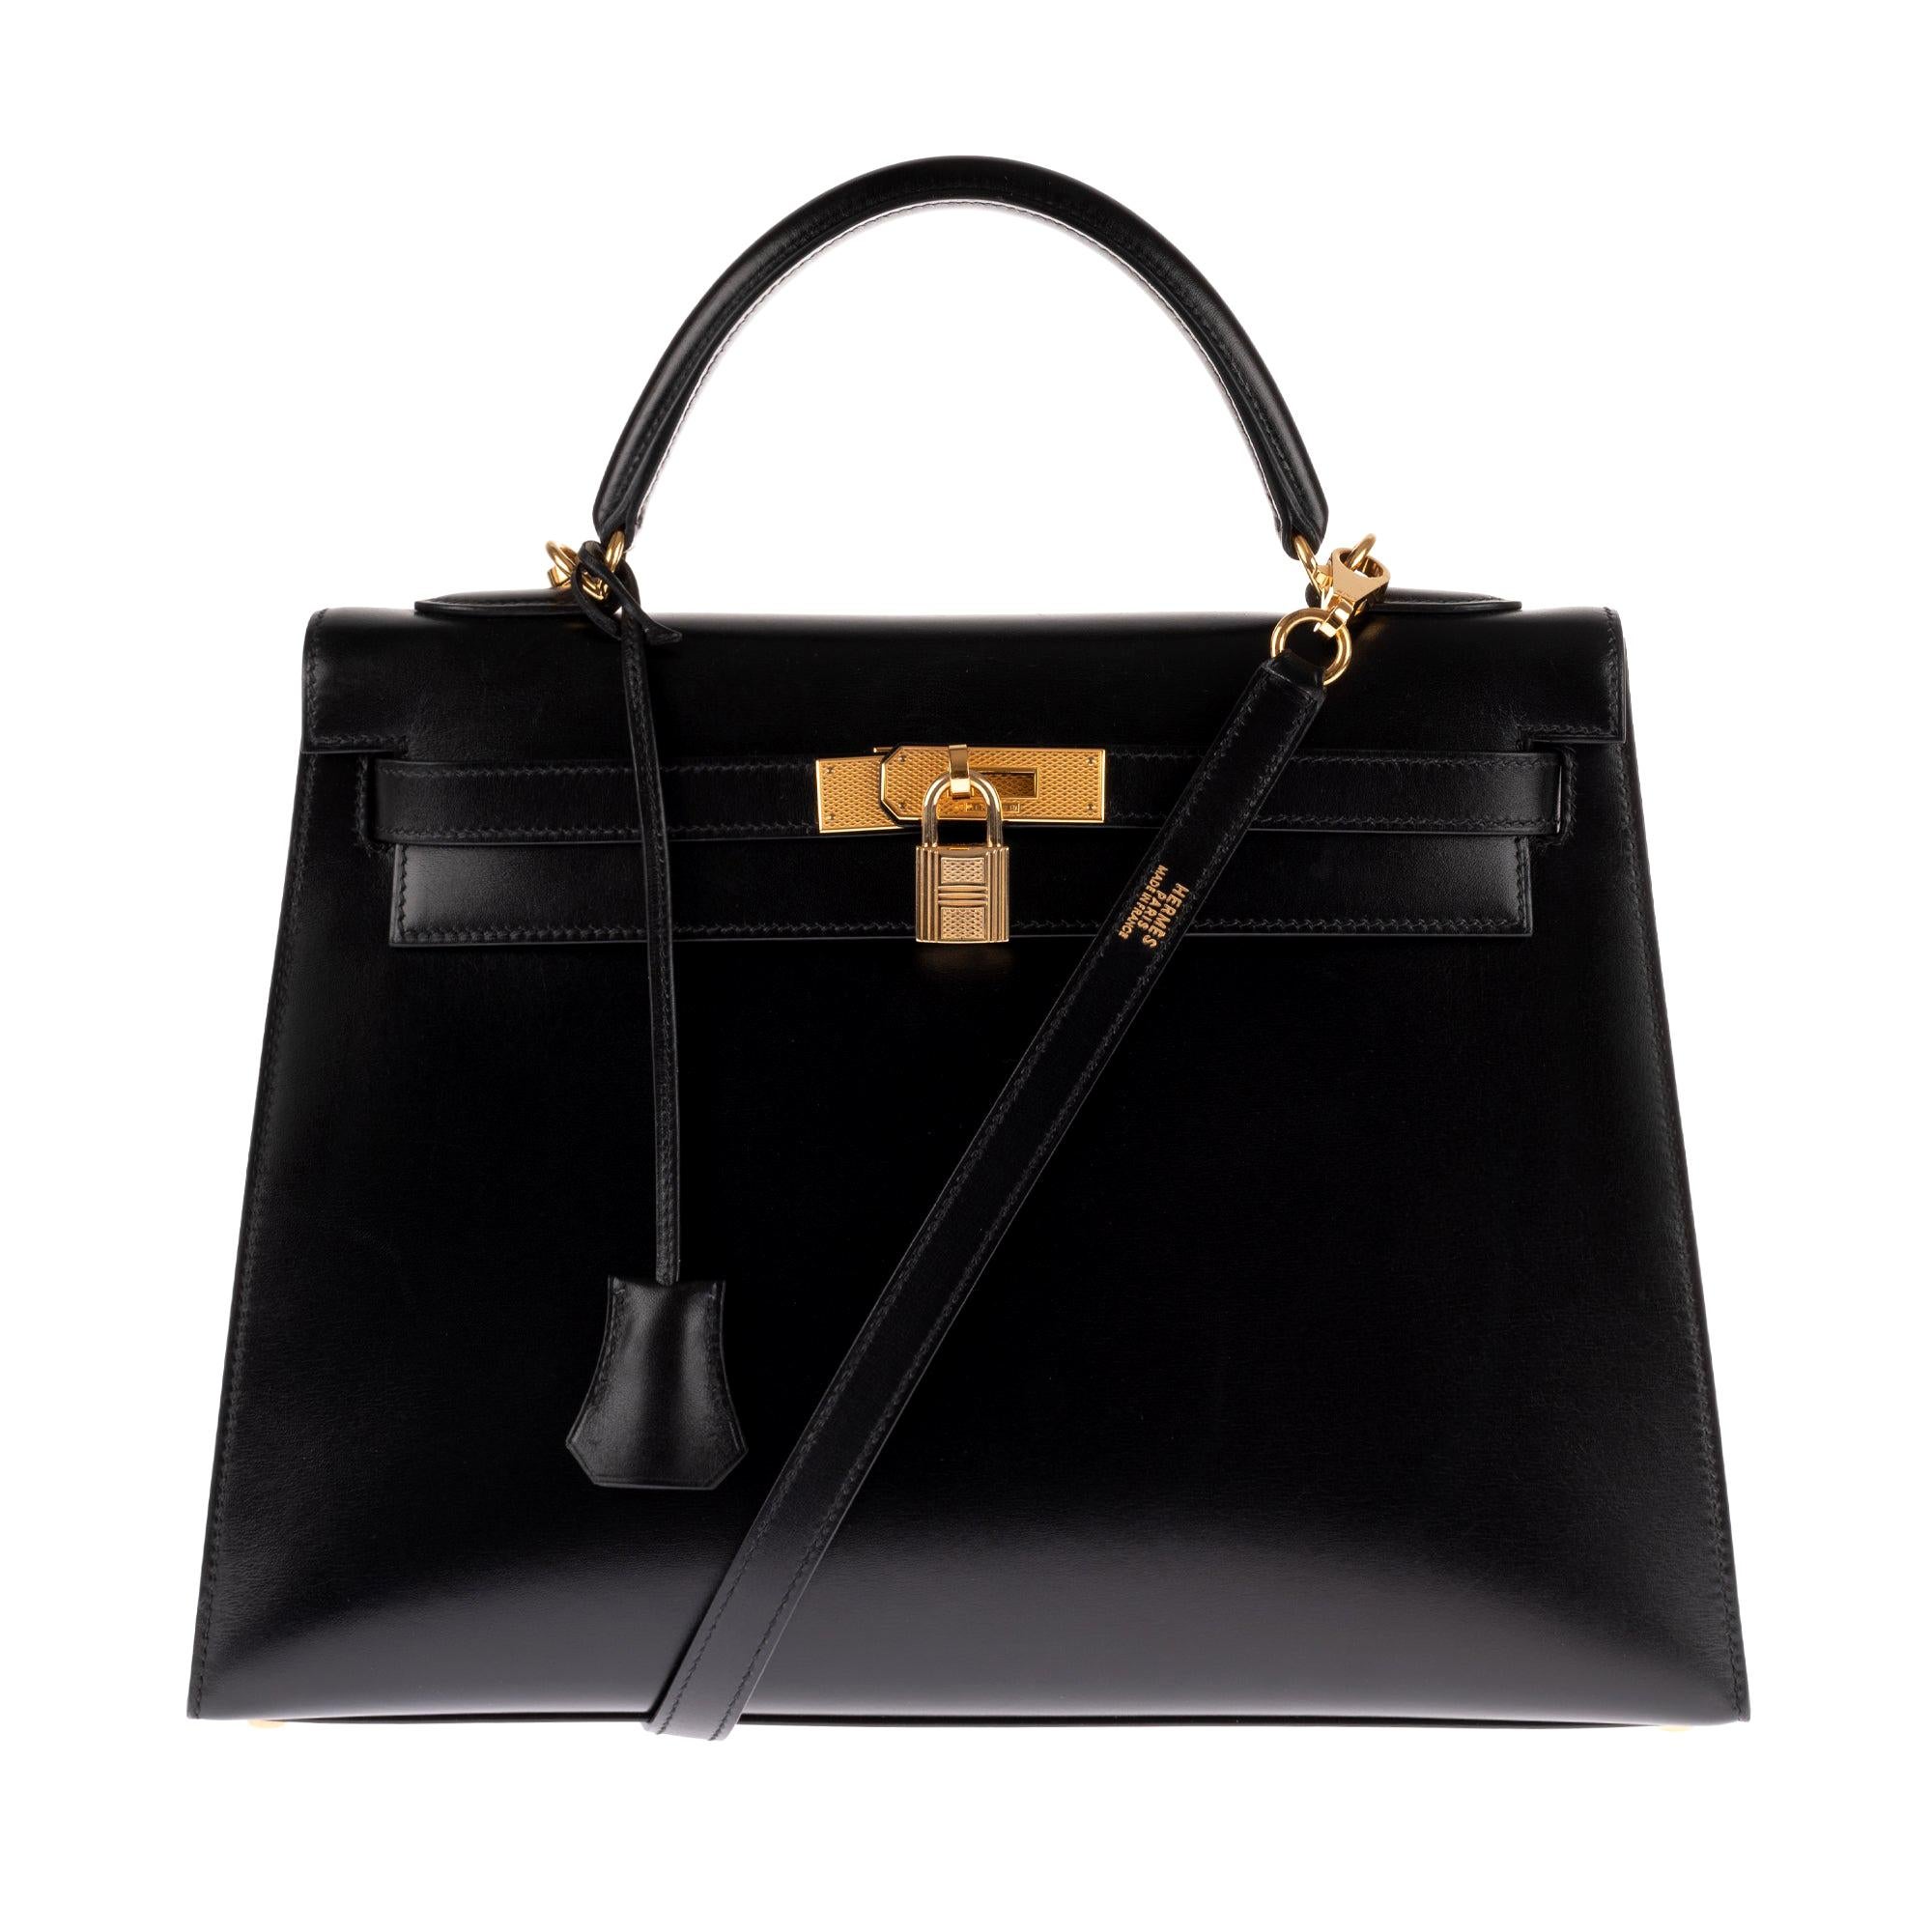 Very limited Handbag Hermès Kelly sellier 32 with strap in black calfskin, GHW!